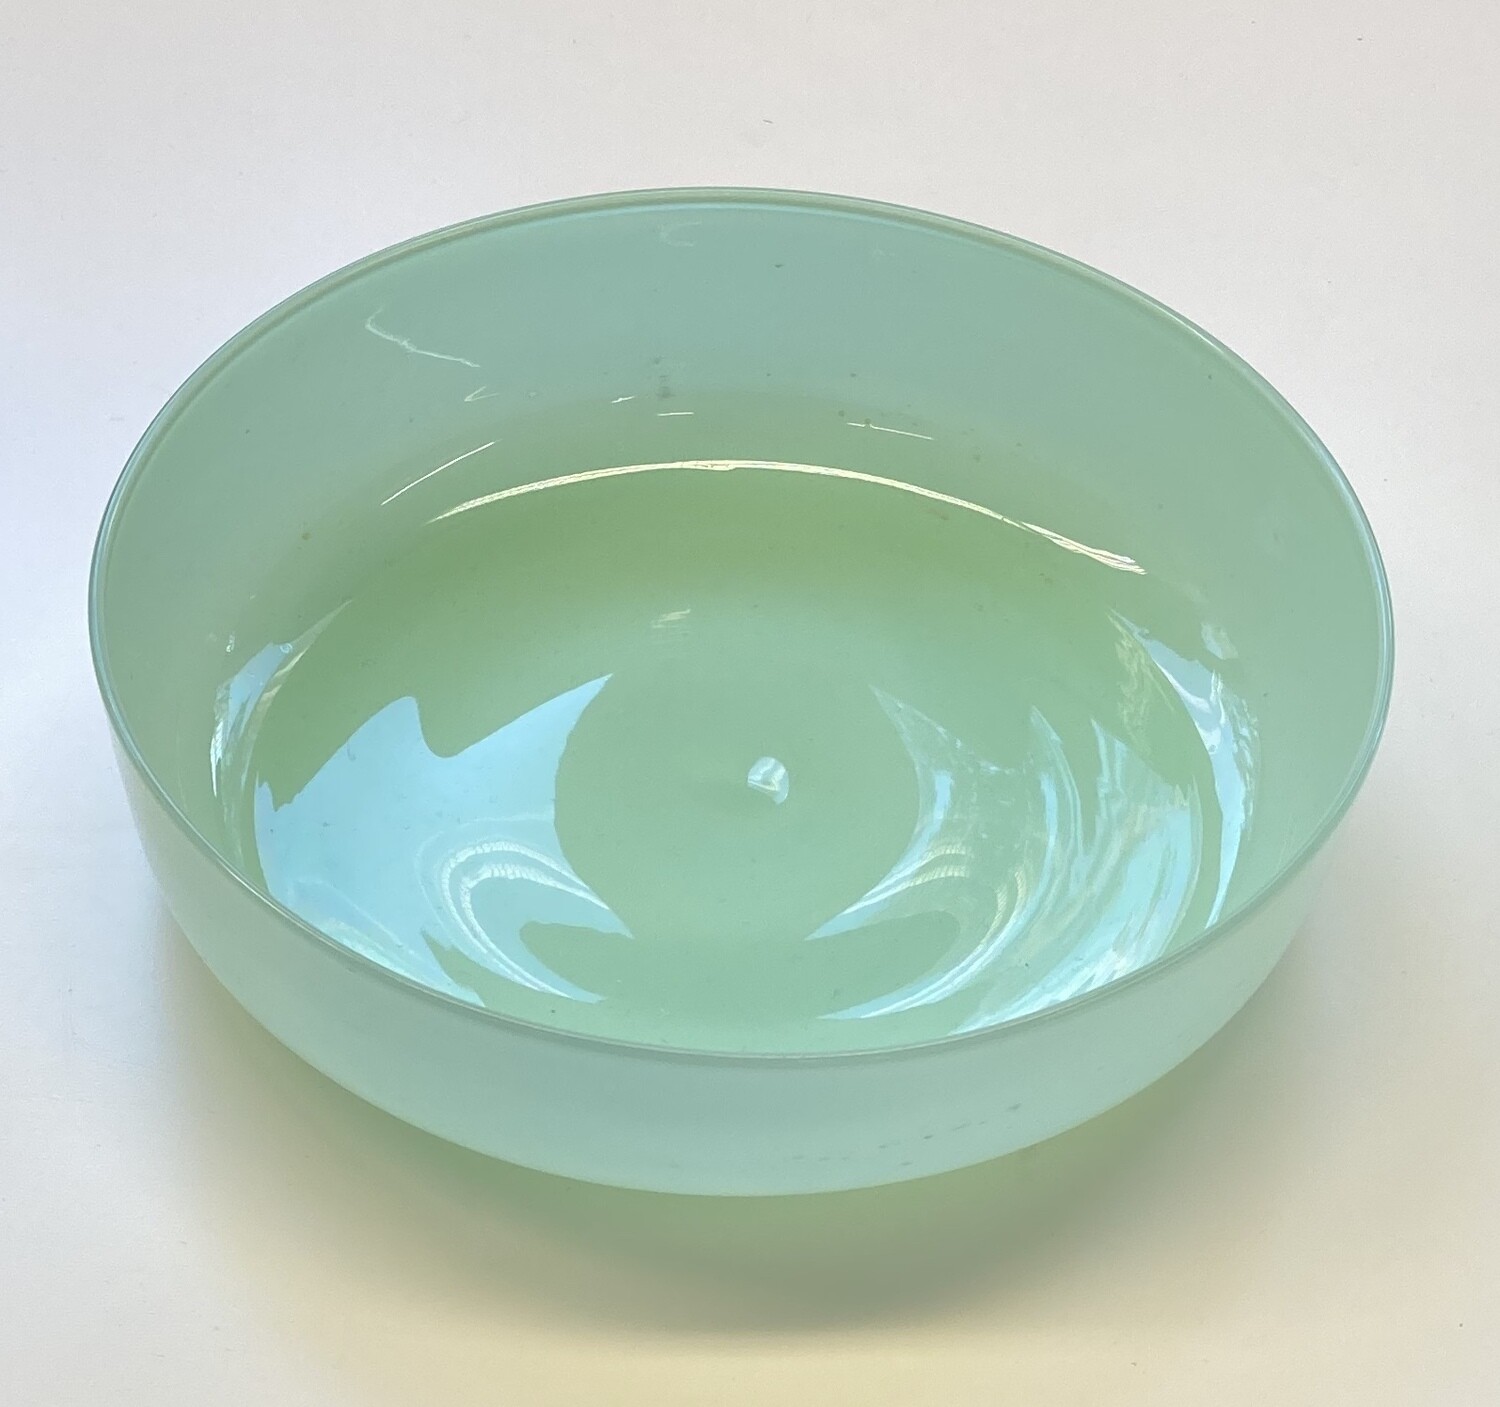 Green glass fruit bowl